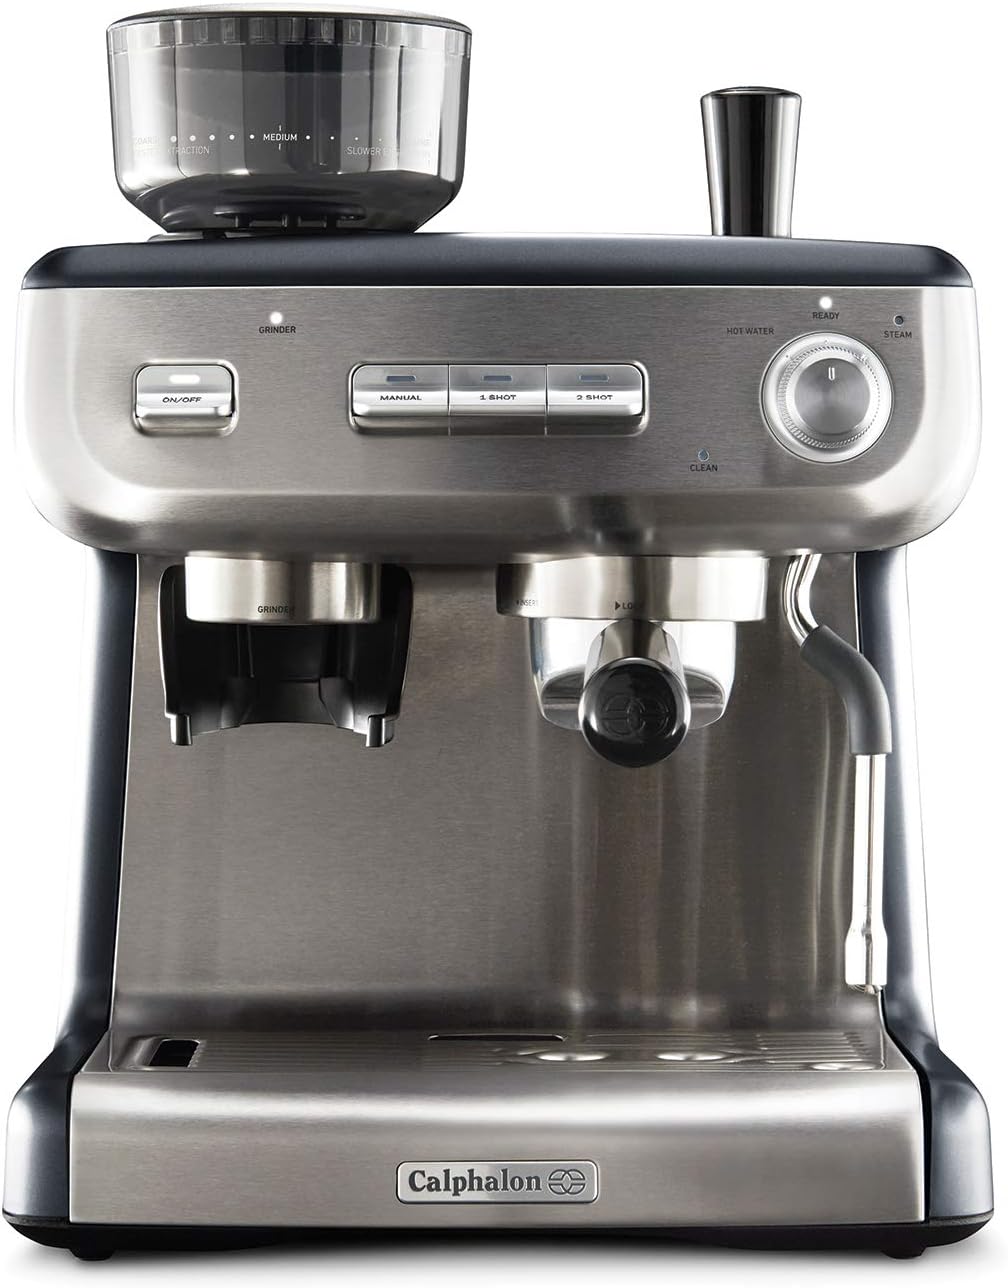 Calphalon Espresso Machine with Coffee Grinder review